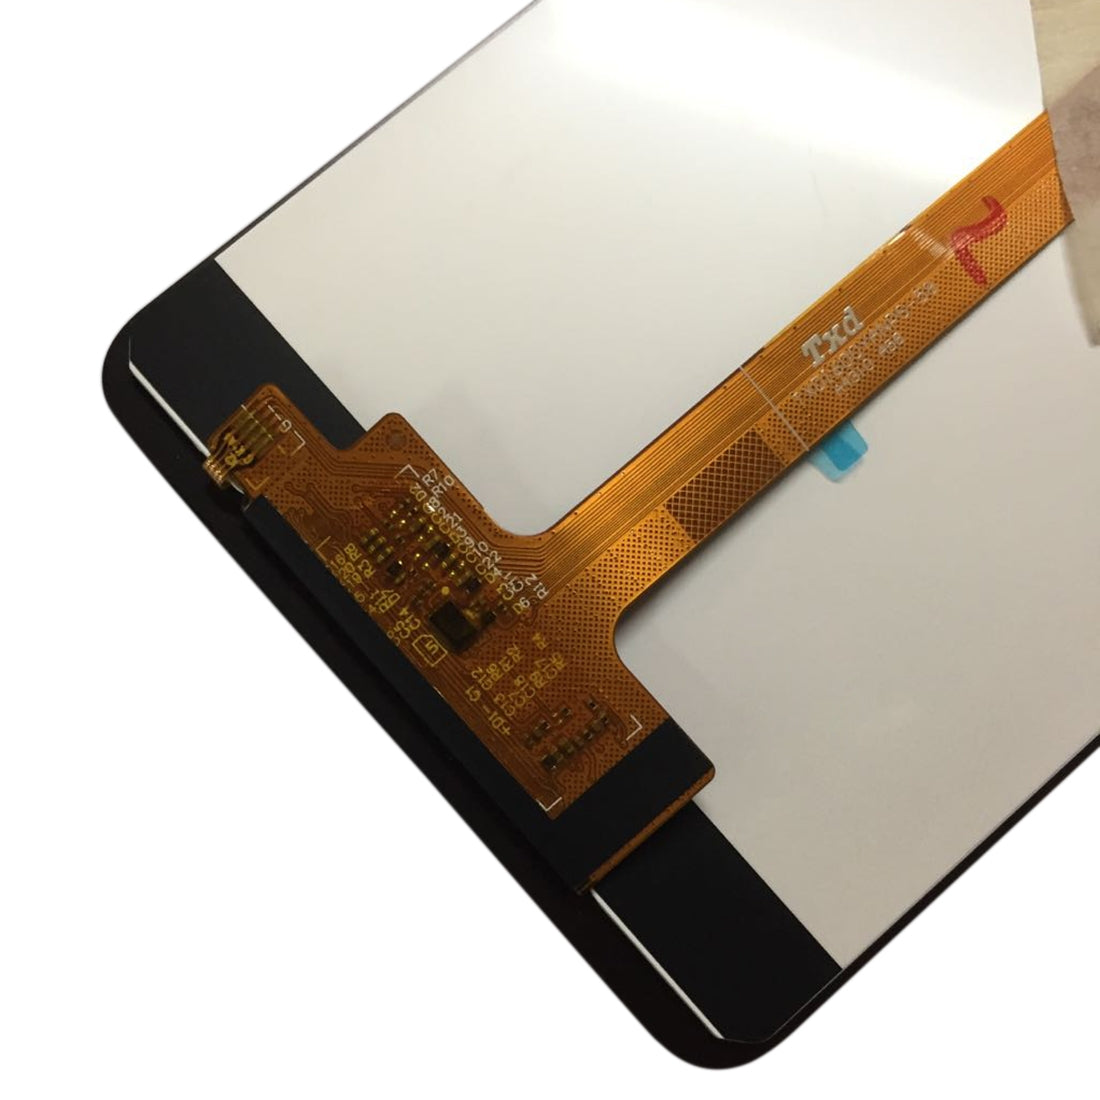 LCD Screen + Touch Digitizer Lenovo K5 Pro White